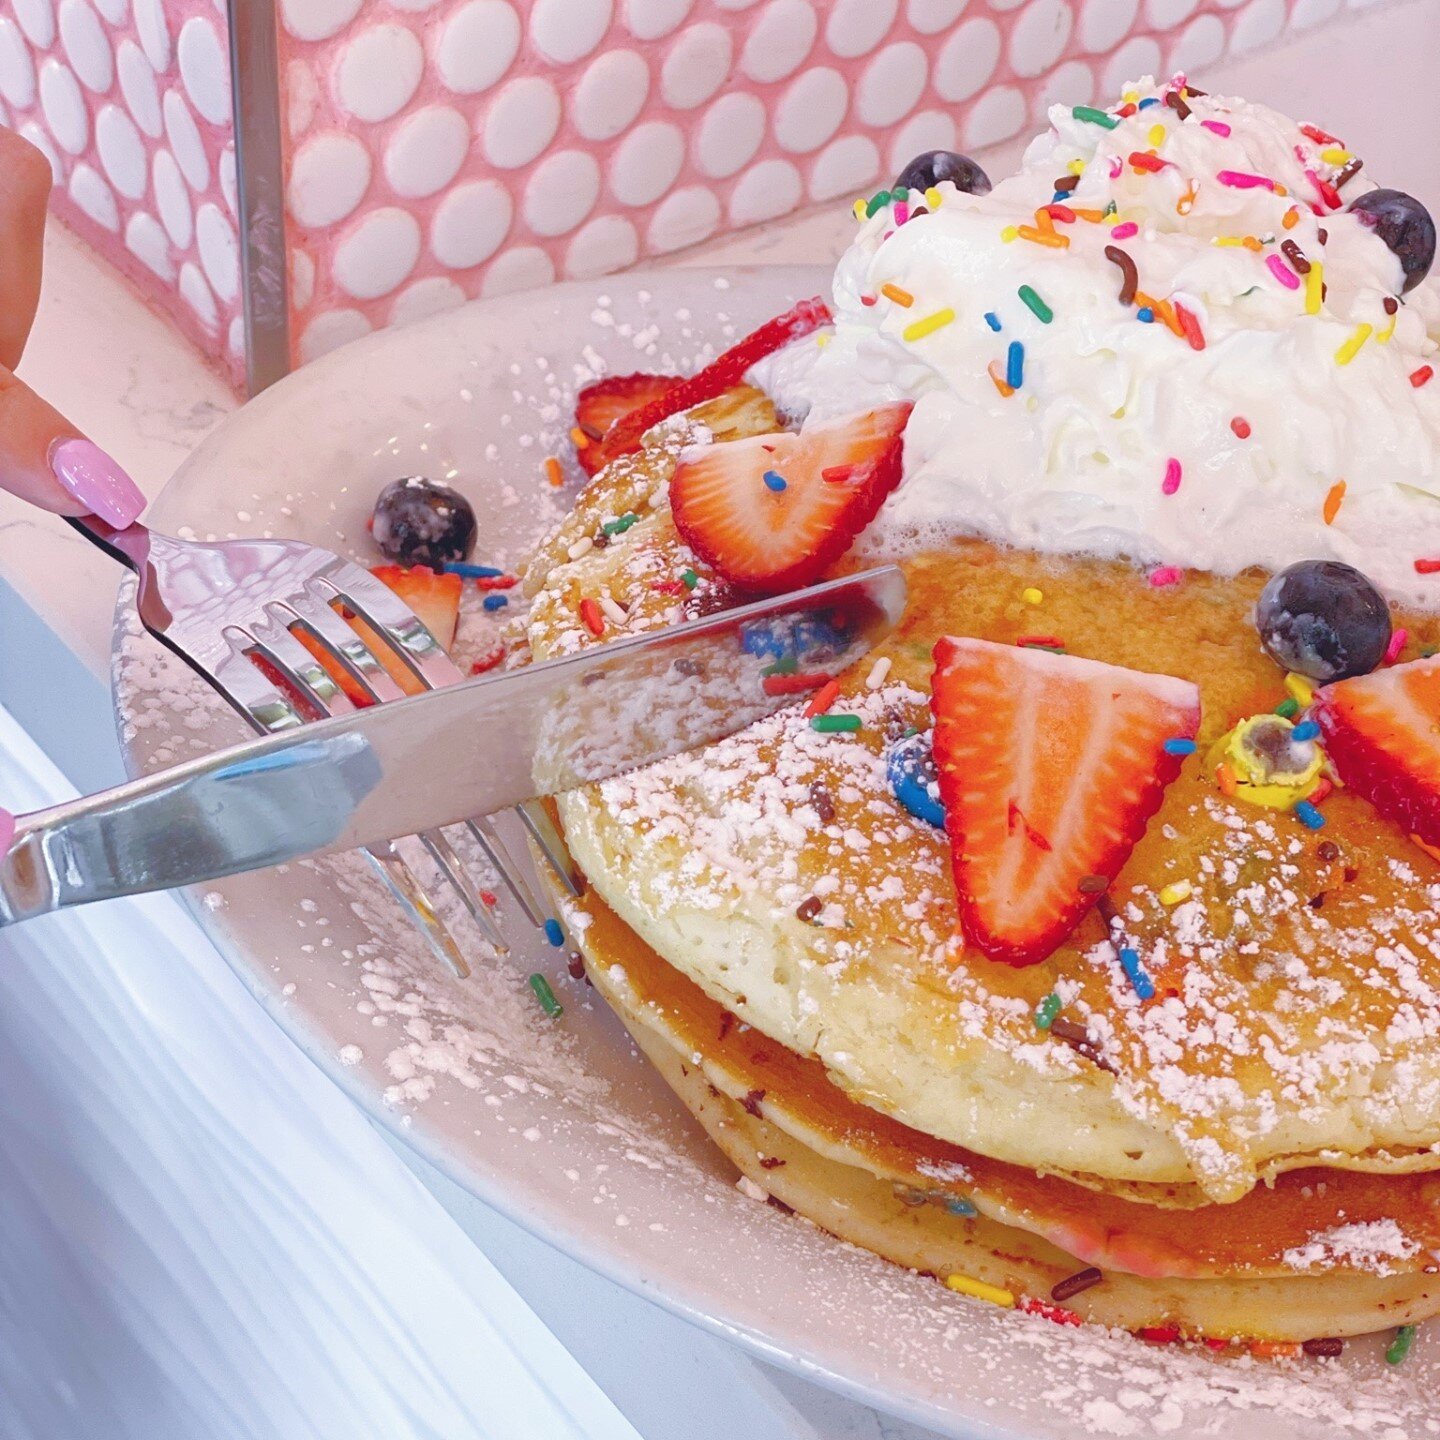 Come enjoy some rainbow pancakes to celebrate the best month of the year!! Happy Pride, San Diego. 🌈🥞🏳️&zwj;🌈💖🏳️&zwj;⚧️⁠
⁠
#BreakfastAndBubbles #TasteTheStars #SanDiegoPride⁠